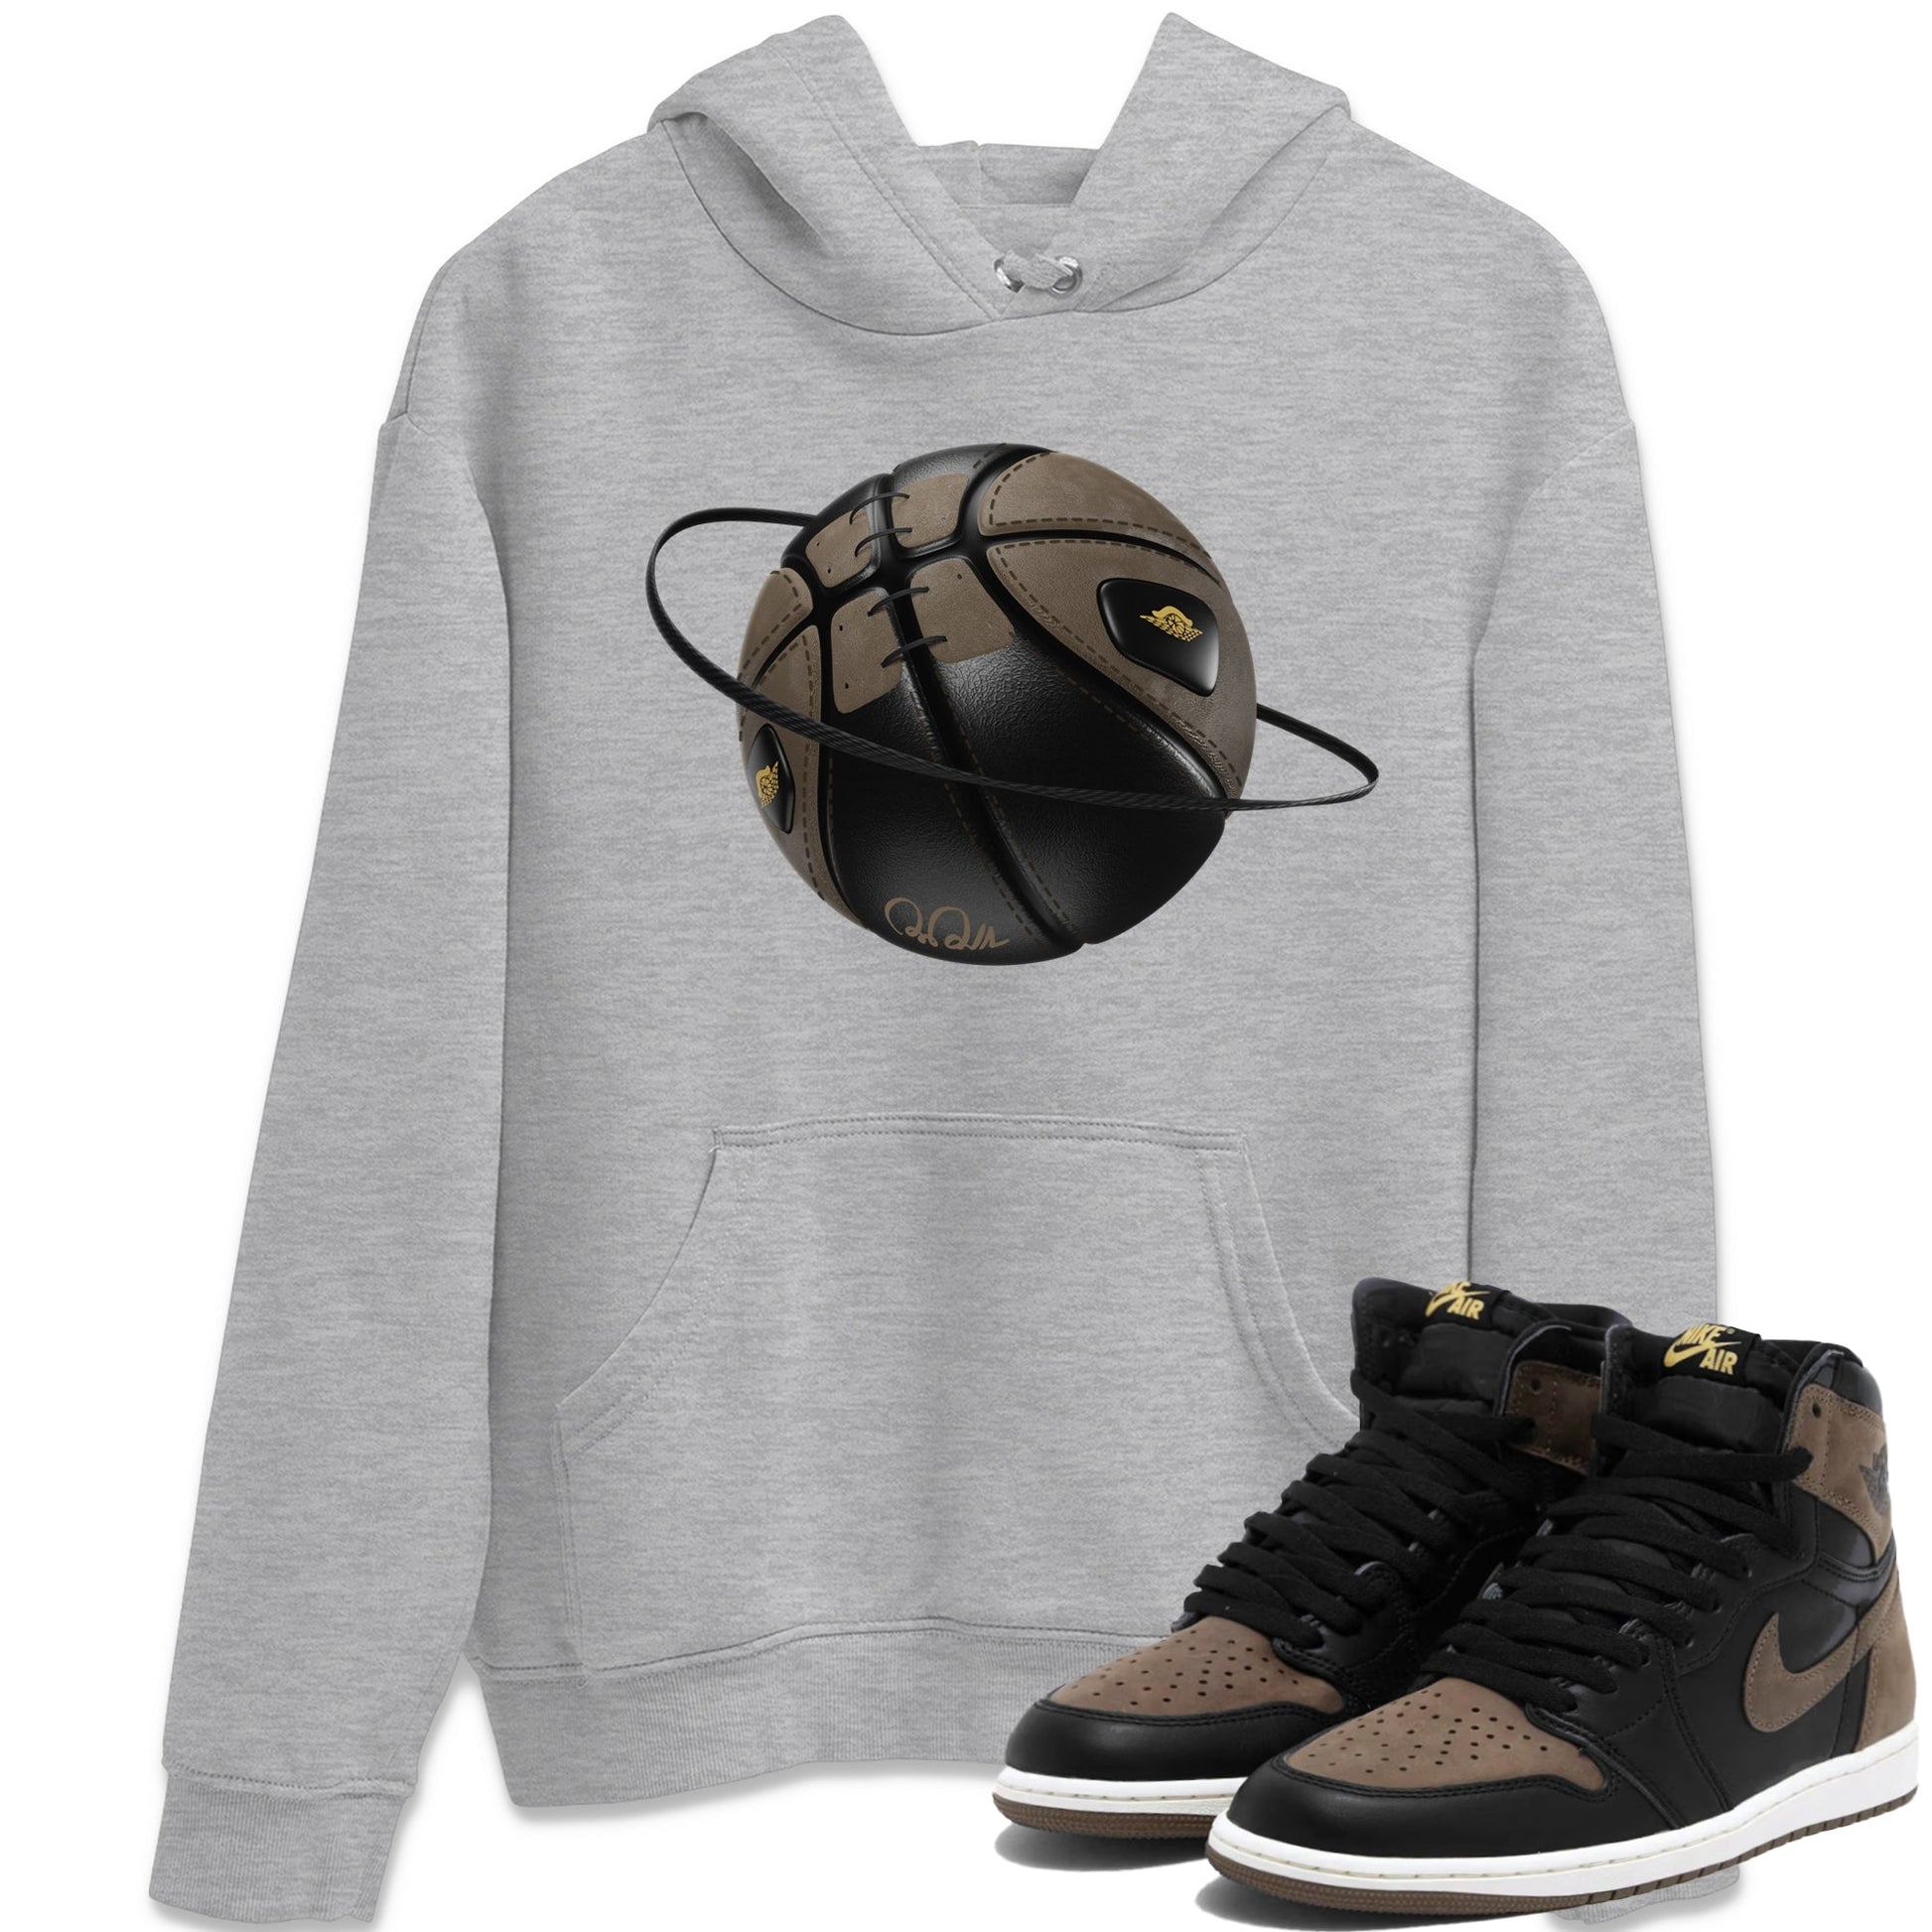 Air Jordan 1 Palomino shirt to match jordans Basketball Planet Streetwear Sneaker Shirt AJ1 High Palomino Drip Gear Zone Sneaker Matching Clothing Unisex Heather Grey 1 T-Shirt